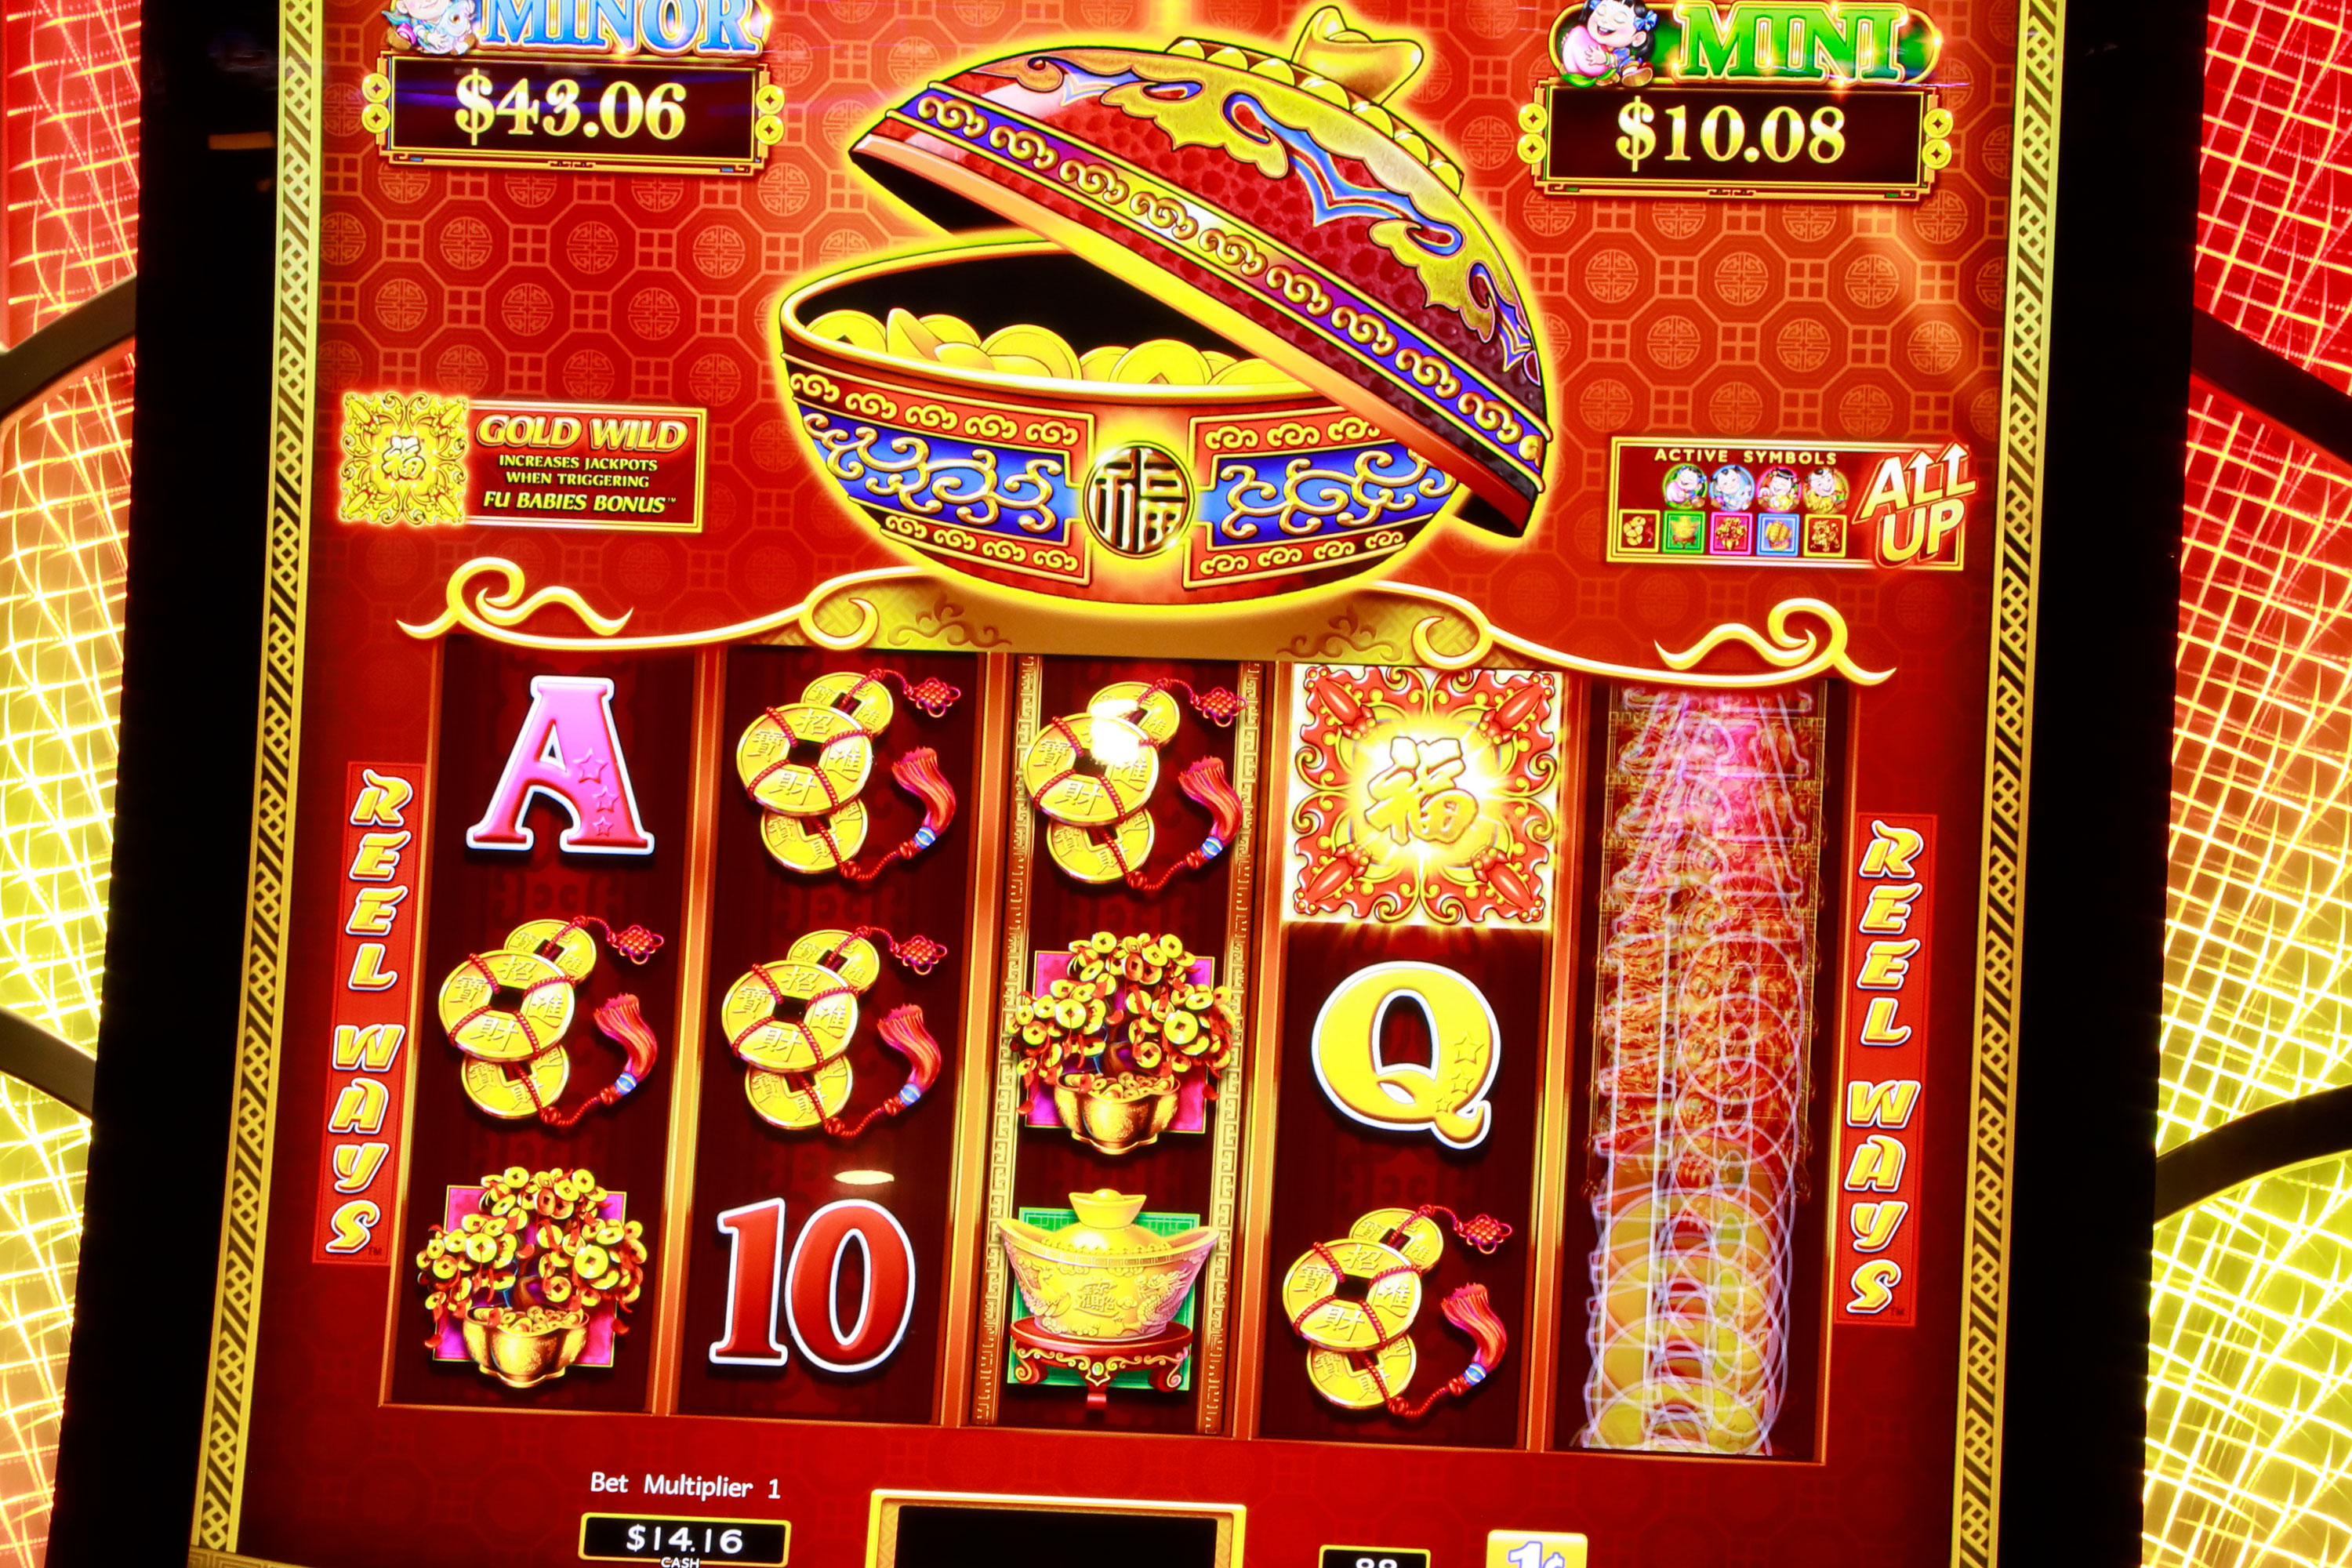 Close-up shot of slot machine